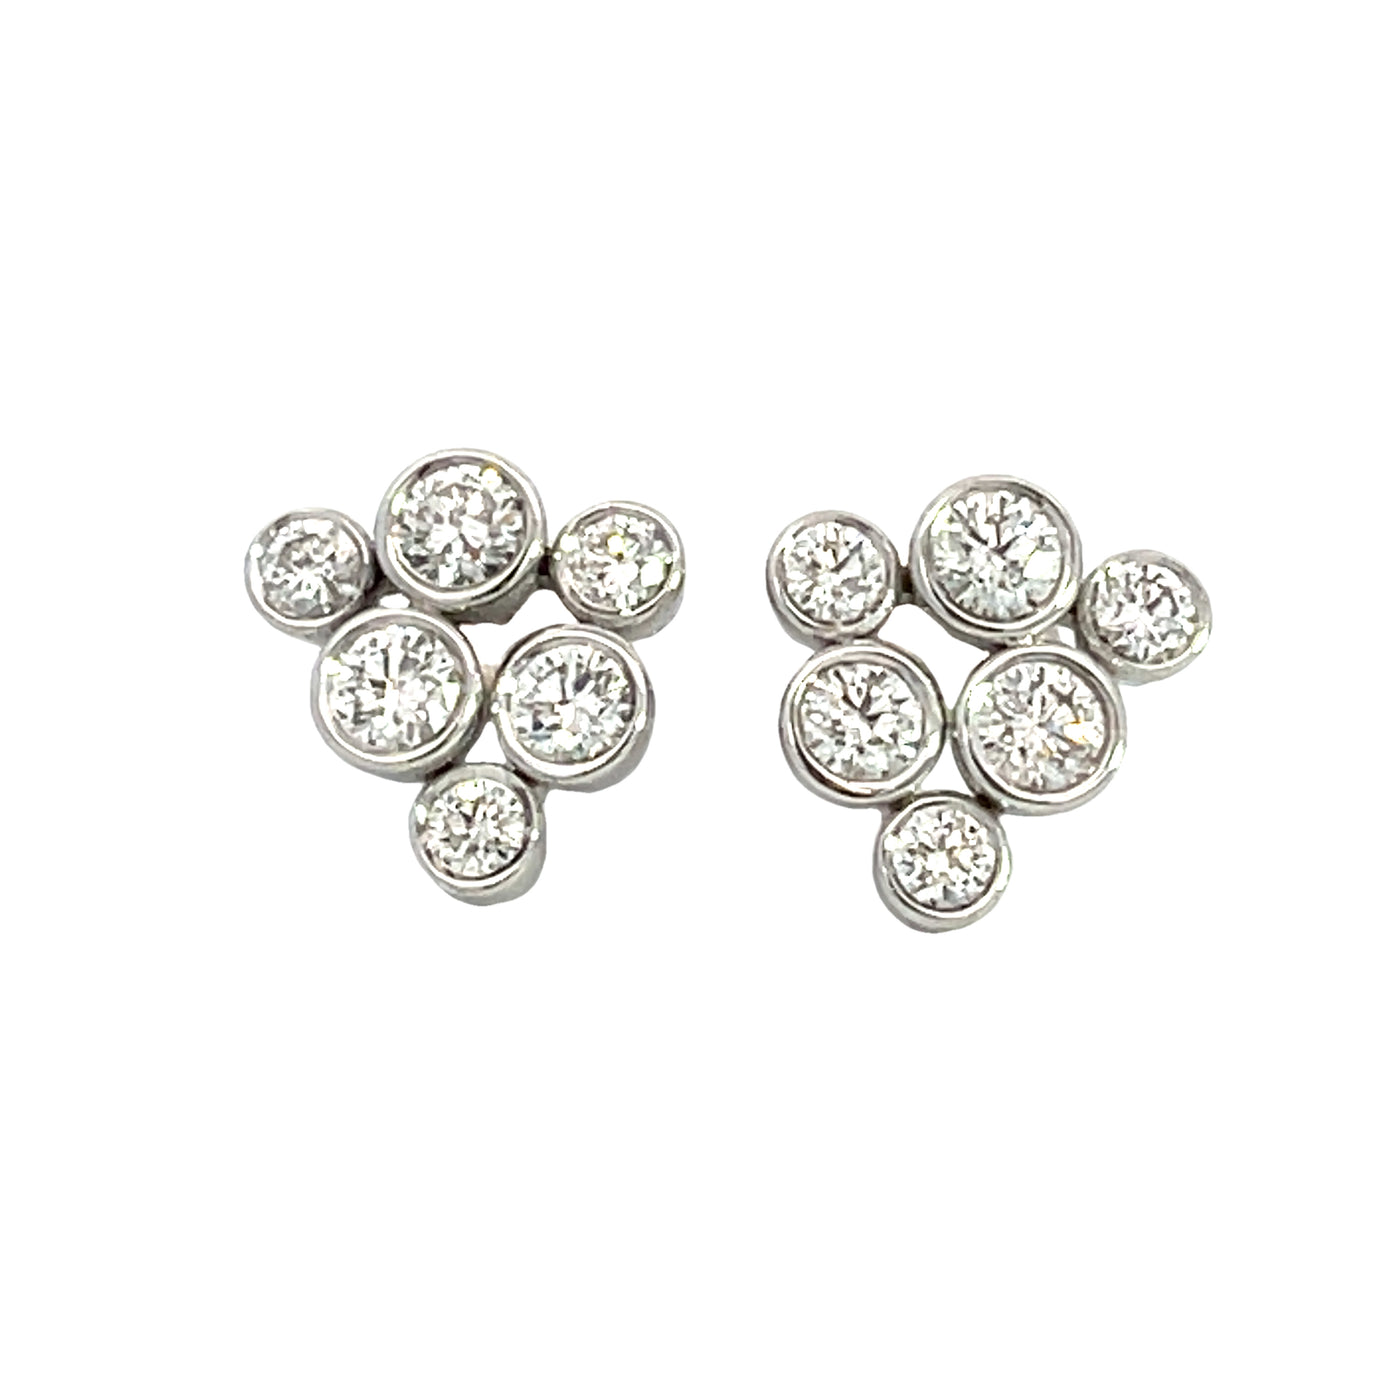 Diamond bubble earrings